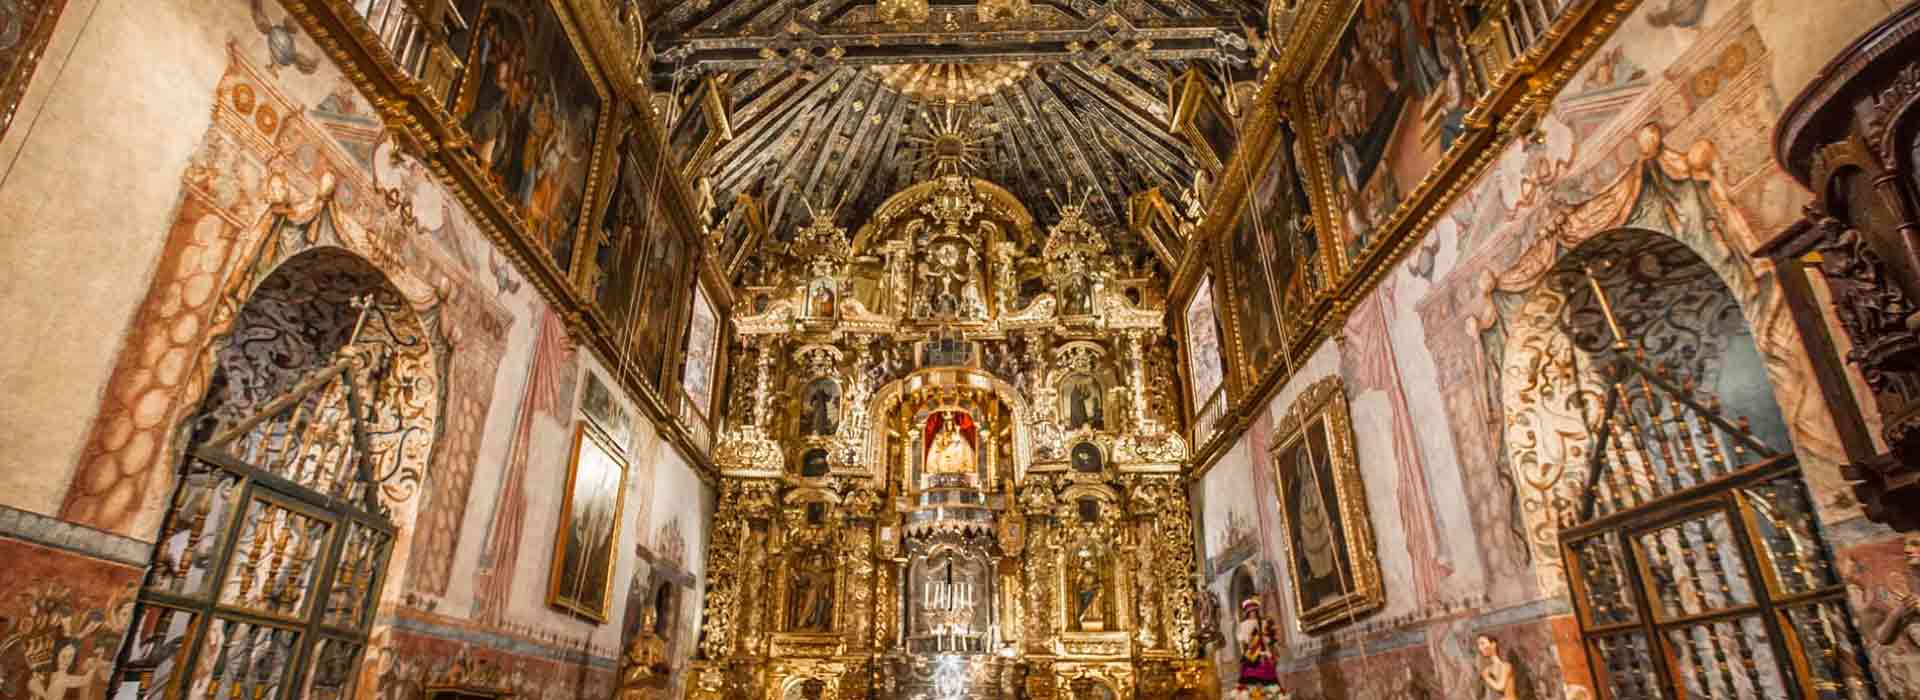 sur de cusco: tipón, piquillaqta y capilla sixtina de andahuaylillas 2